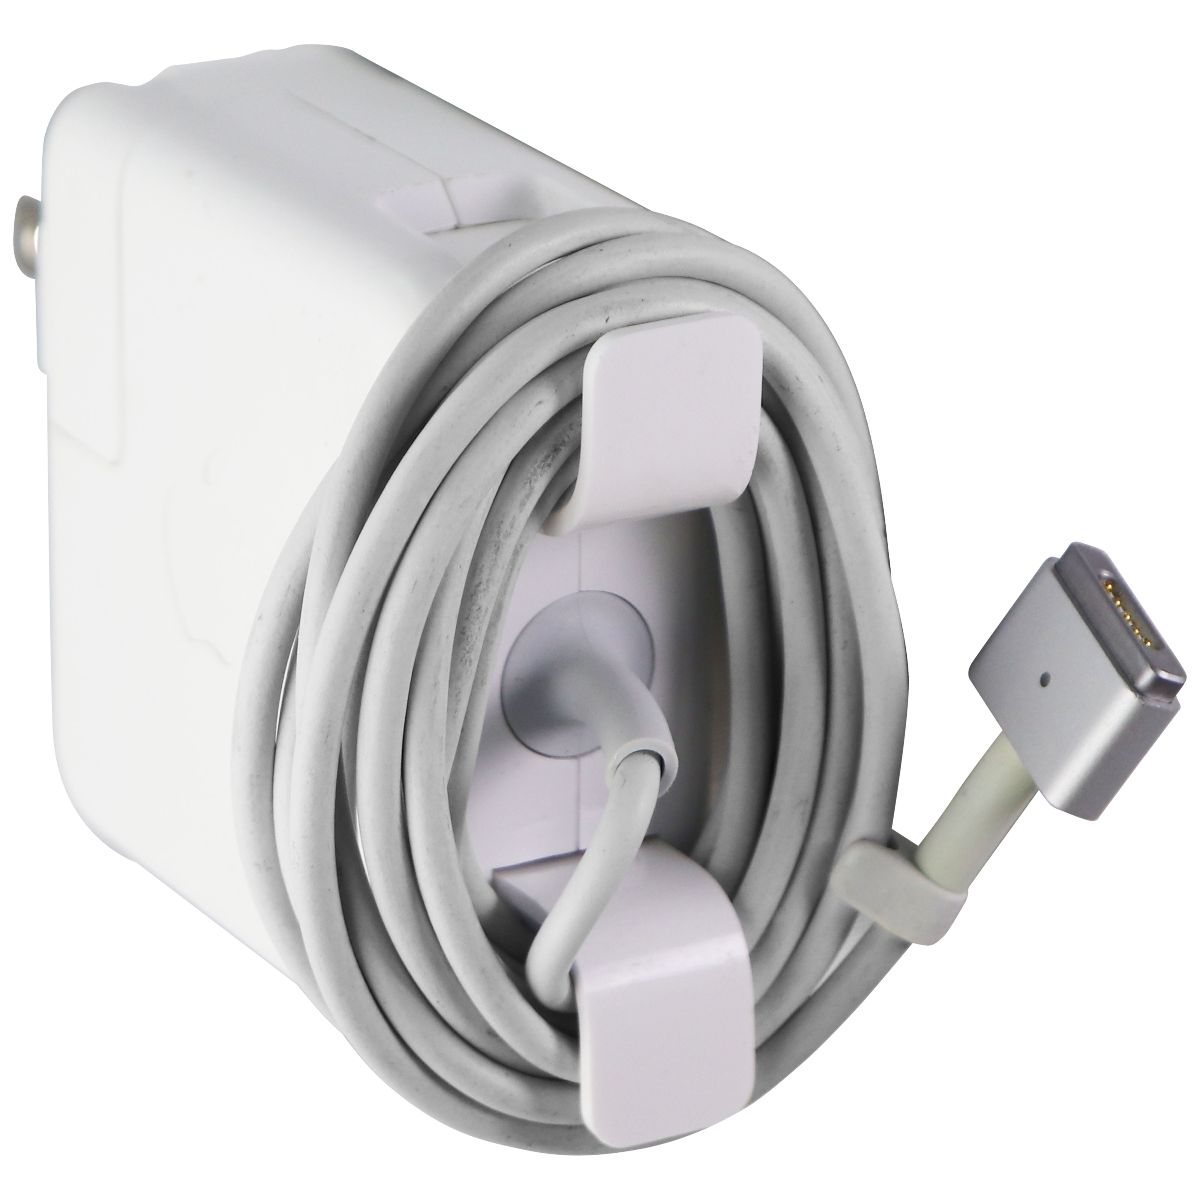 Apple (45-Watt) MagSafe 2 Power Adapter with Folding Wall Plug - White (A1436)